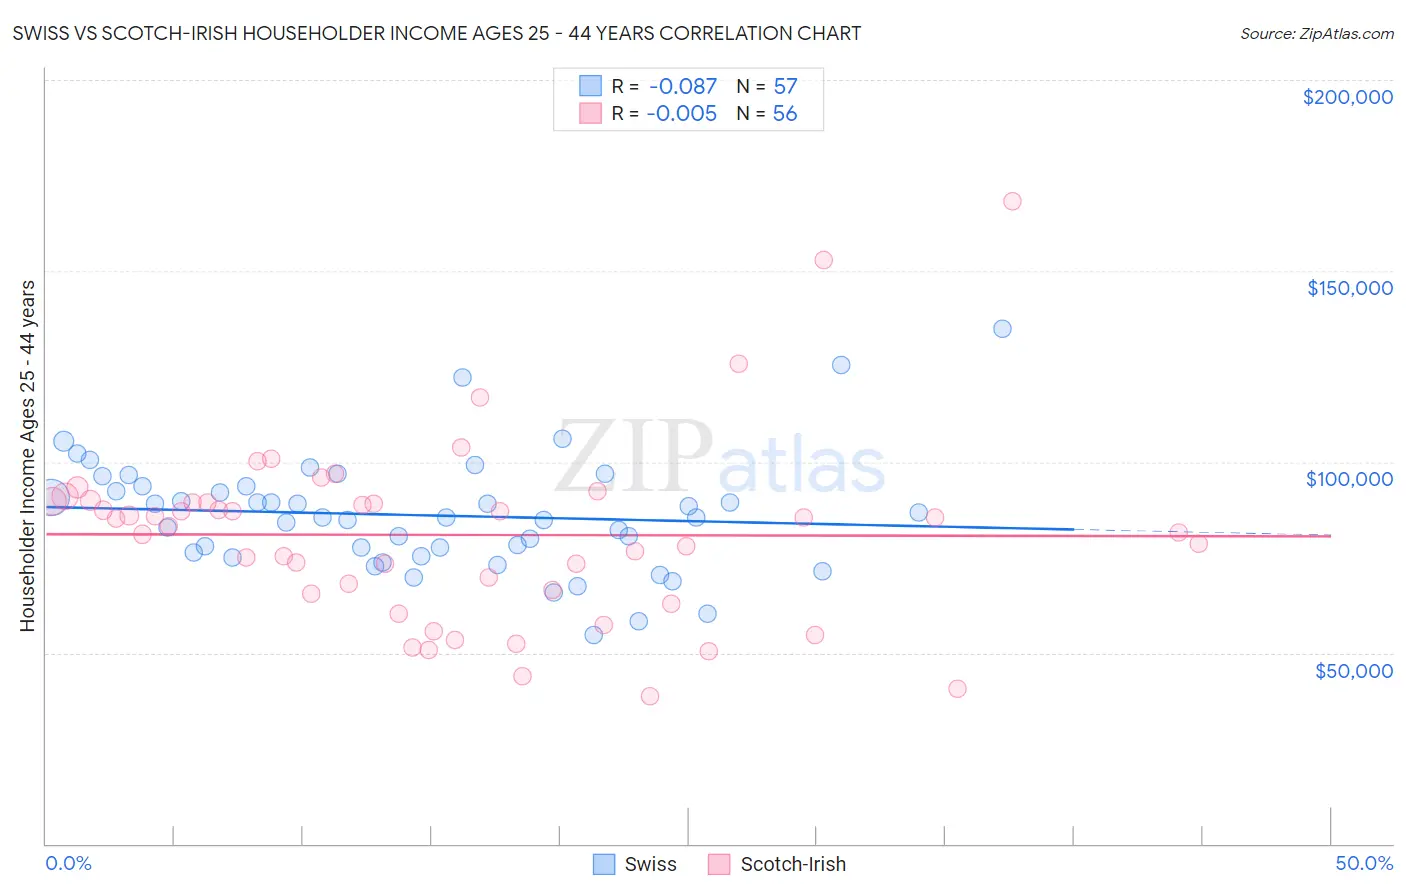 Swiss vs Scotch-Irish Householder Income Ages 25 - 44 years